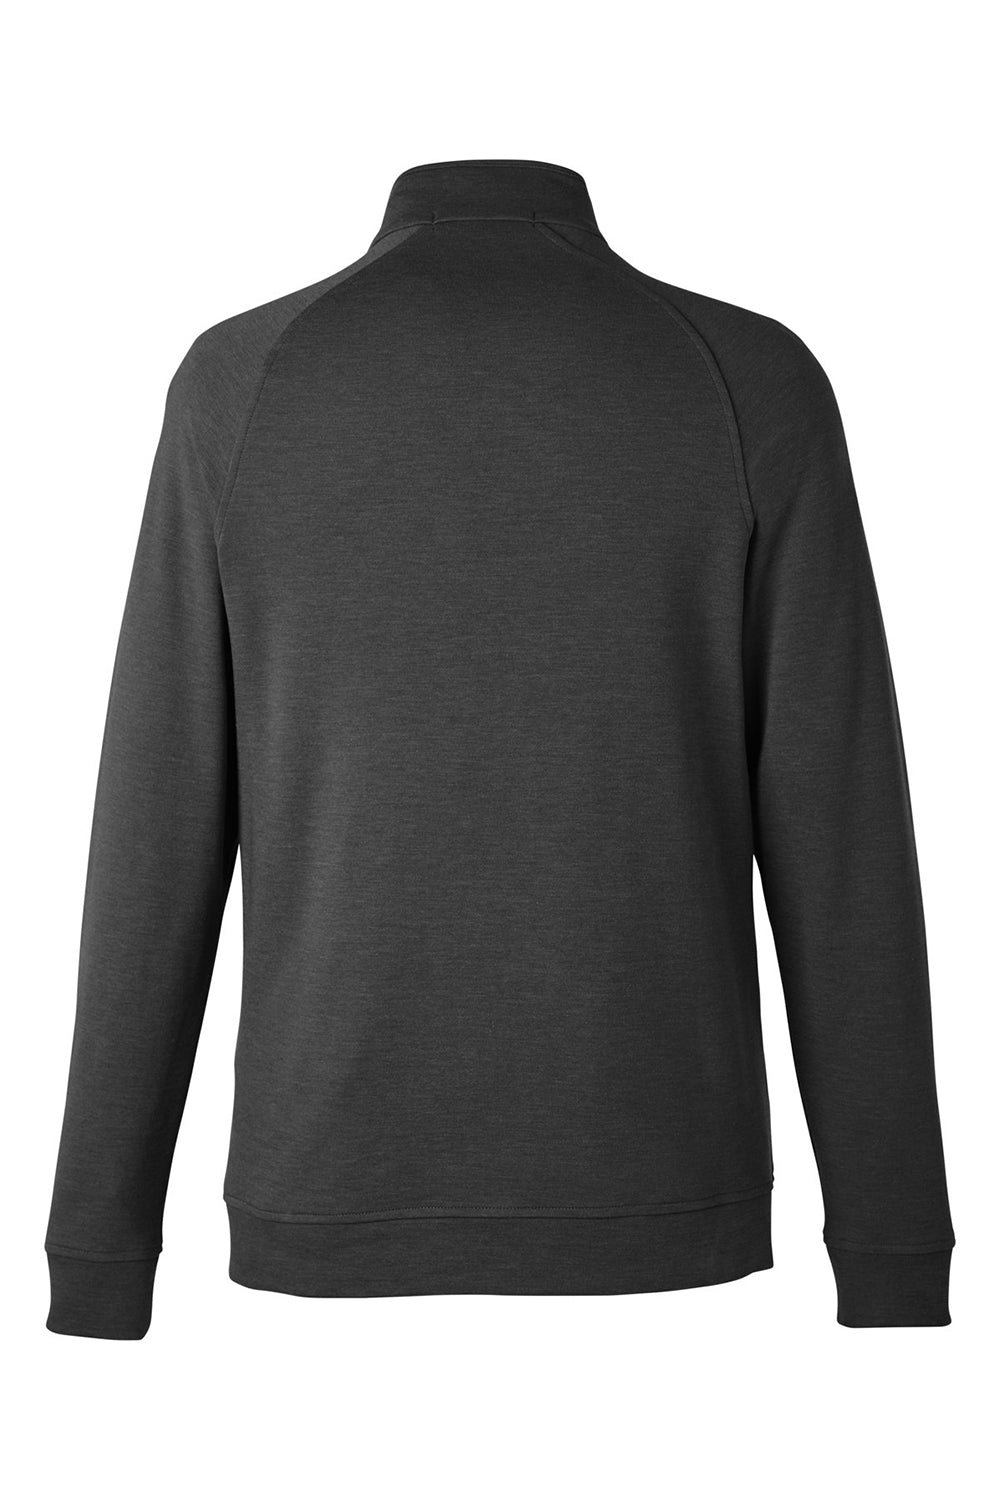 Devon & Jones DG481 Mens New Classics Charleston 1/4 Zip Sweatshirt Black Melange Flat Back